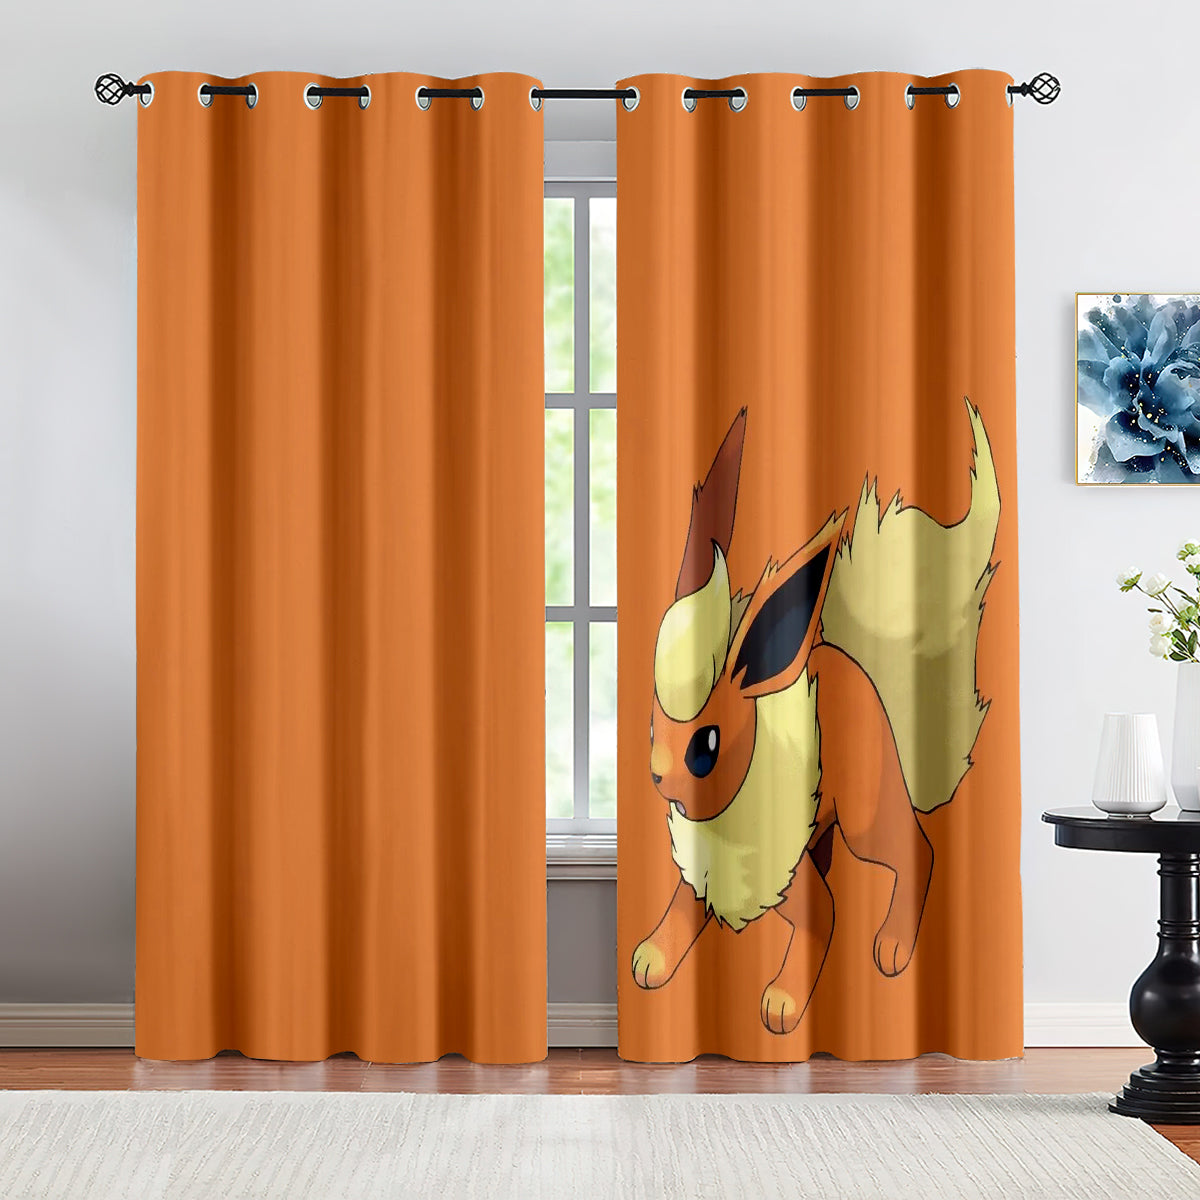 Pokemon Fennekin Flareon Blackout Curtains Drapes for Window Treatment Set